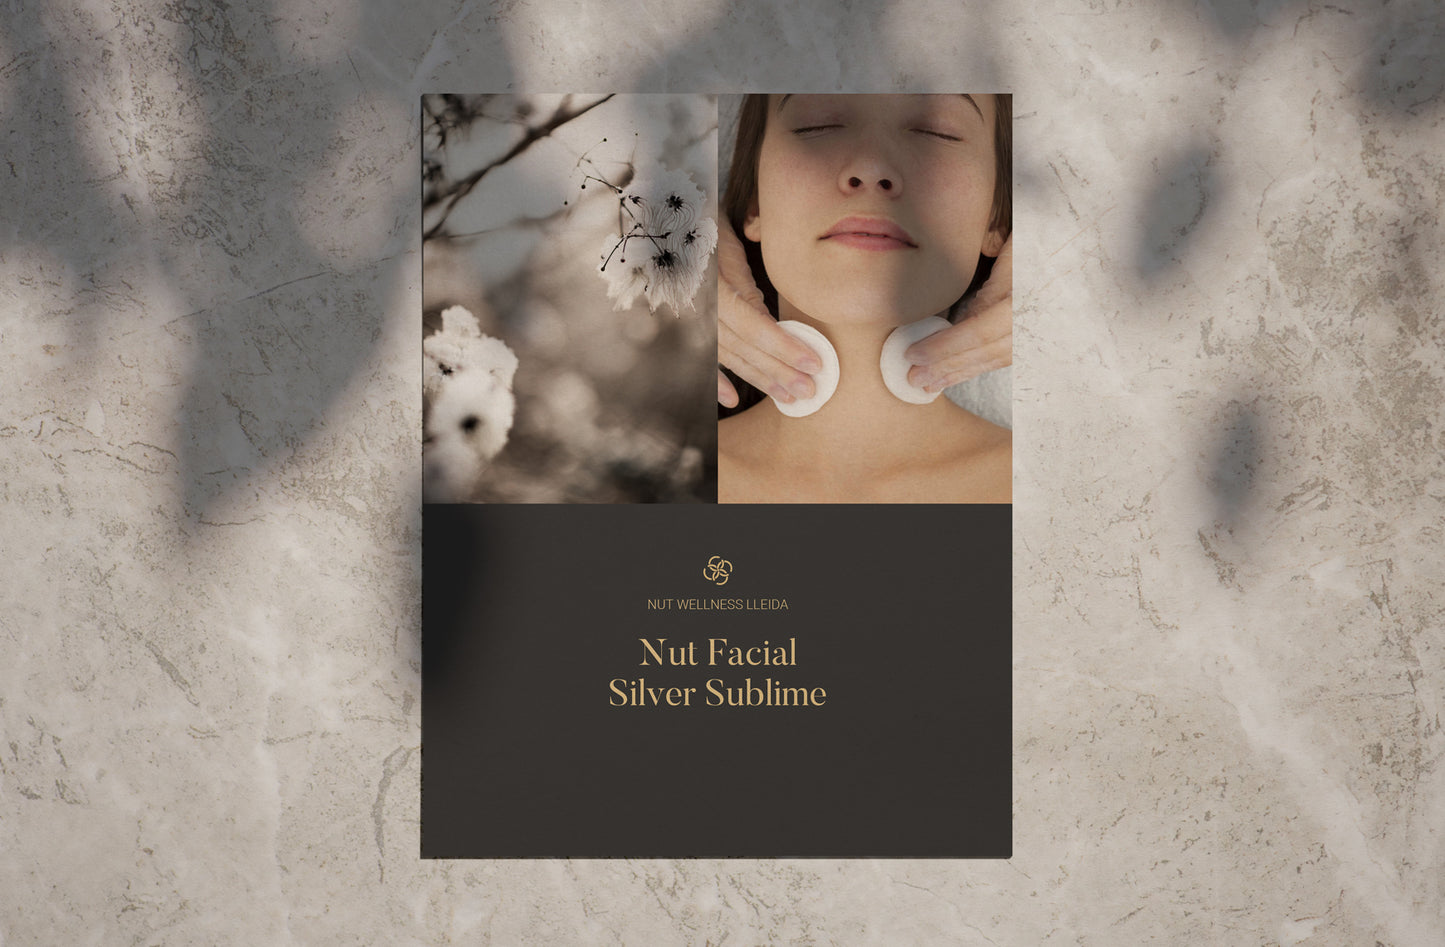 Nut Facial Silver Sublime